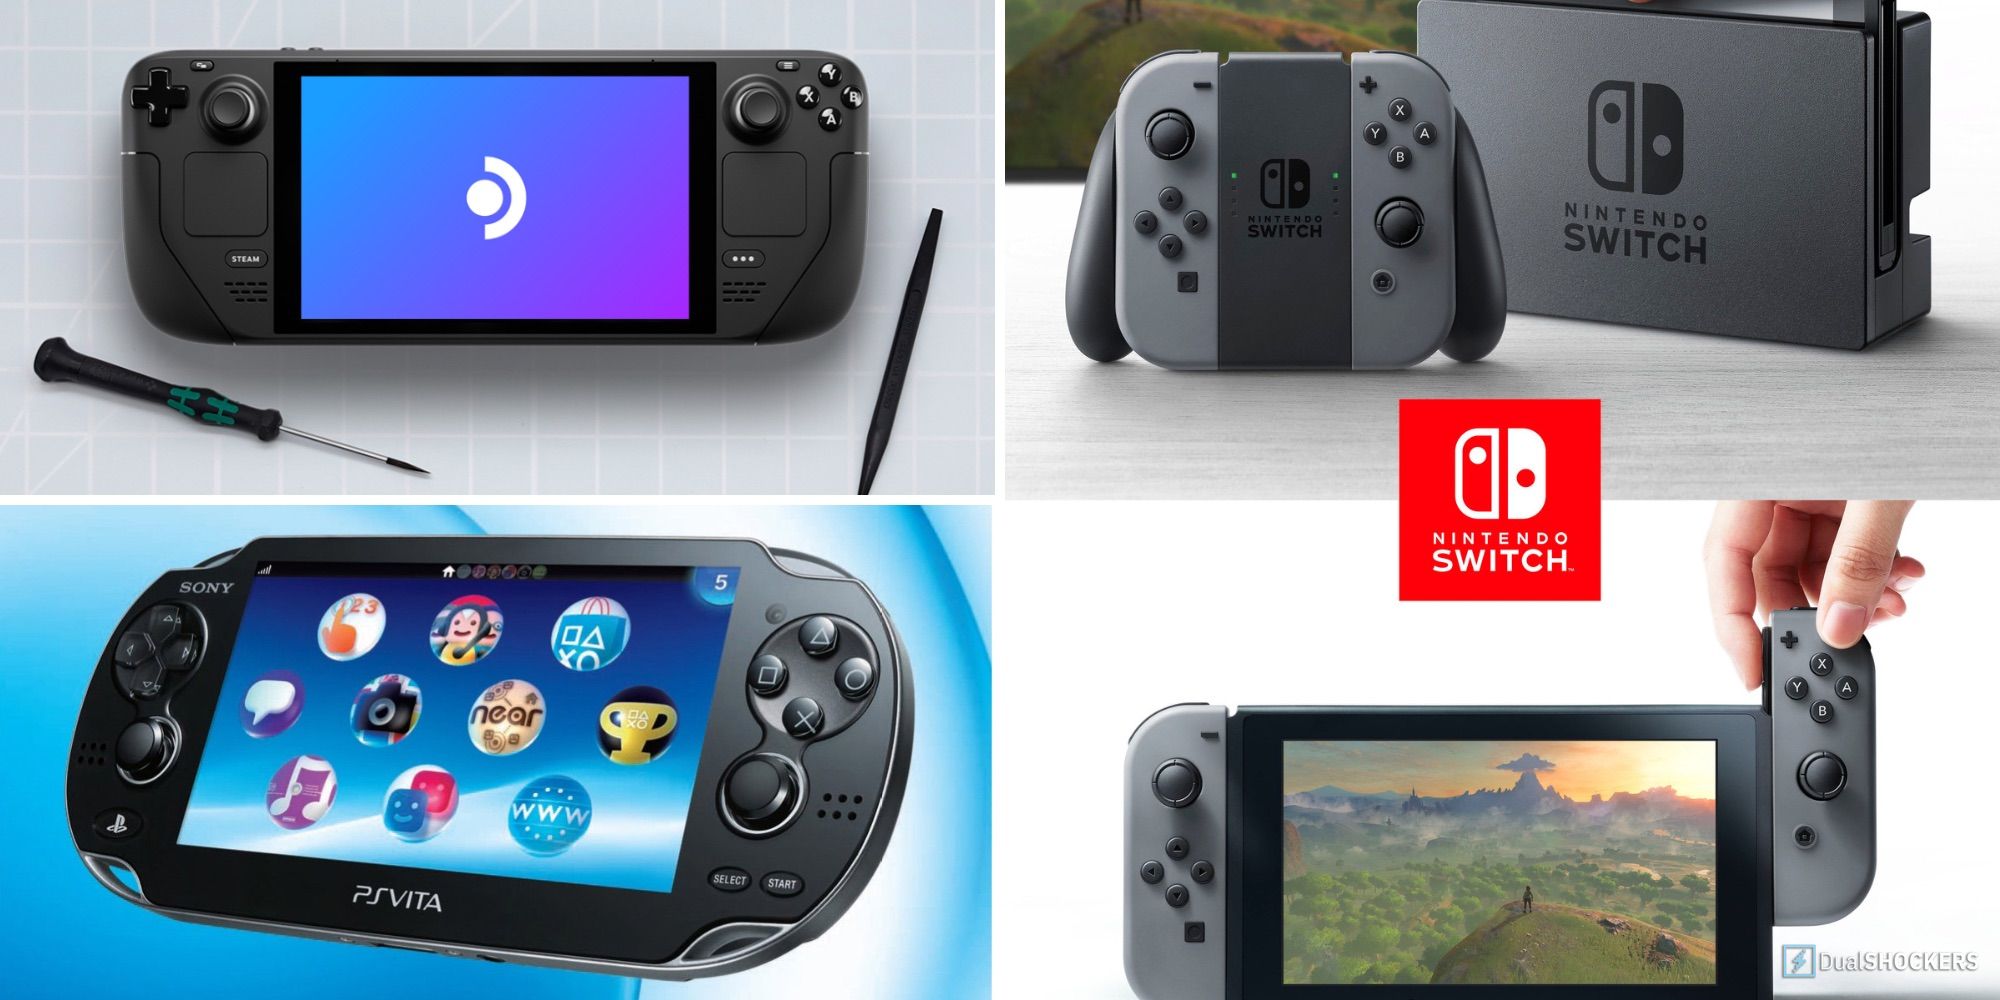 Nintendo Switch, Sony PSP, and Valve Steam Deck split image